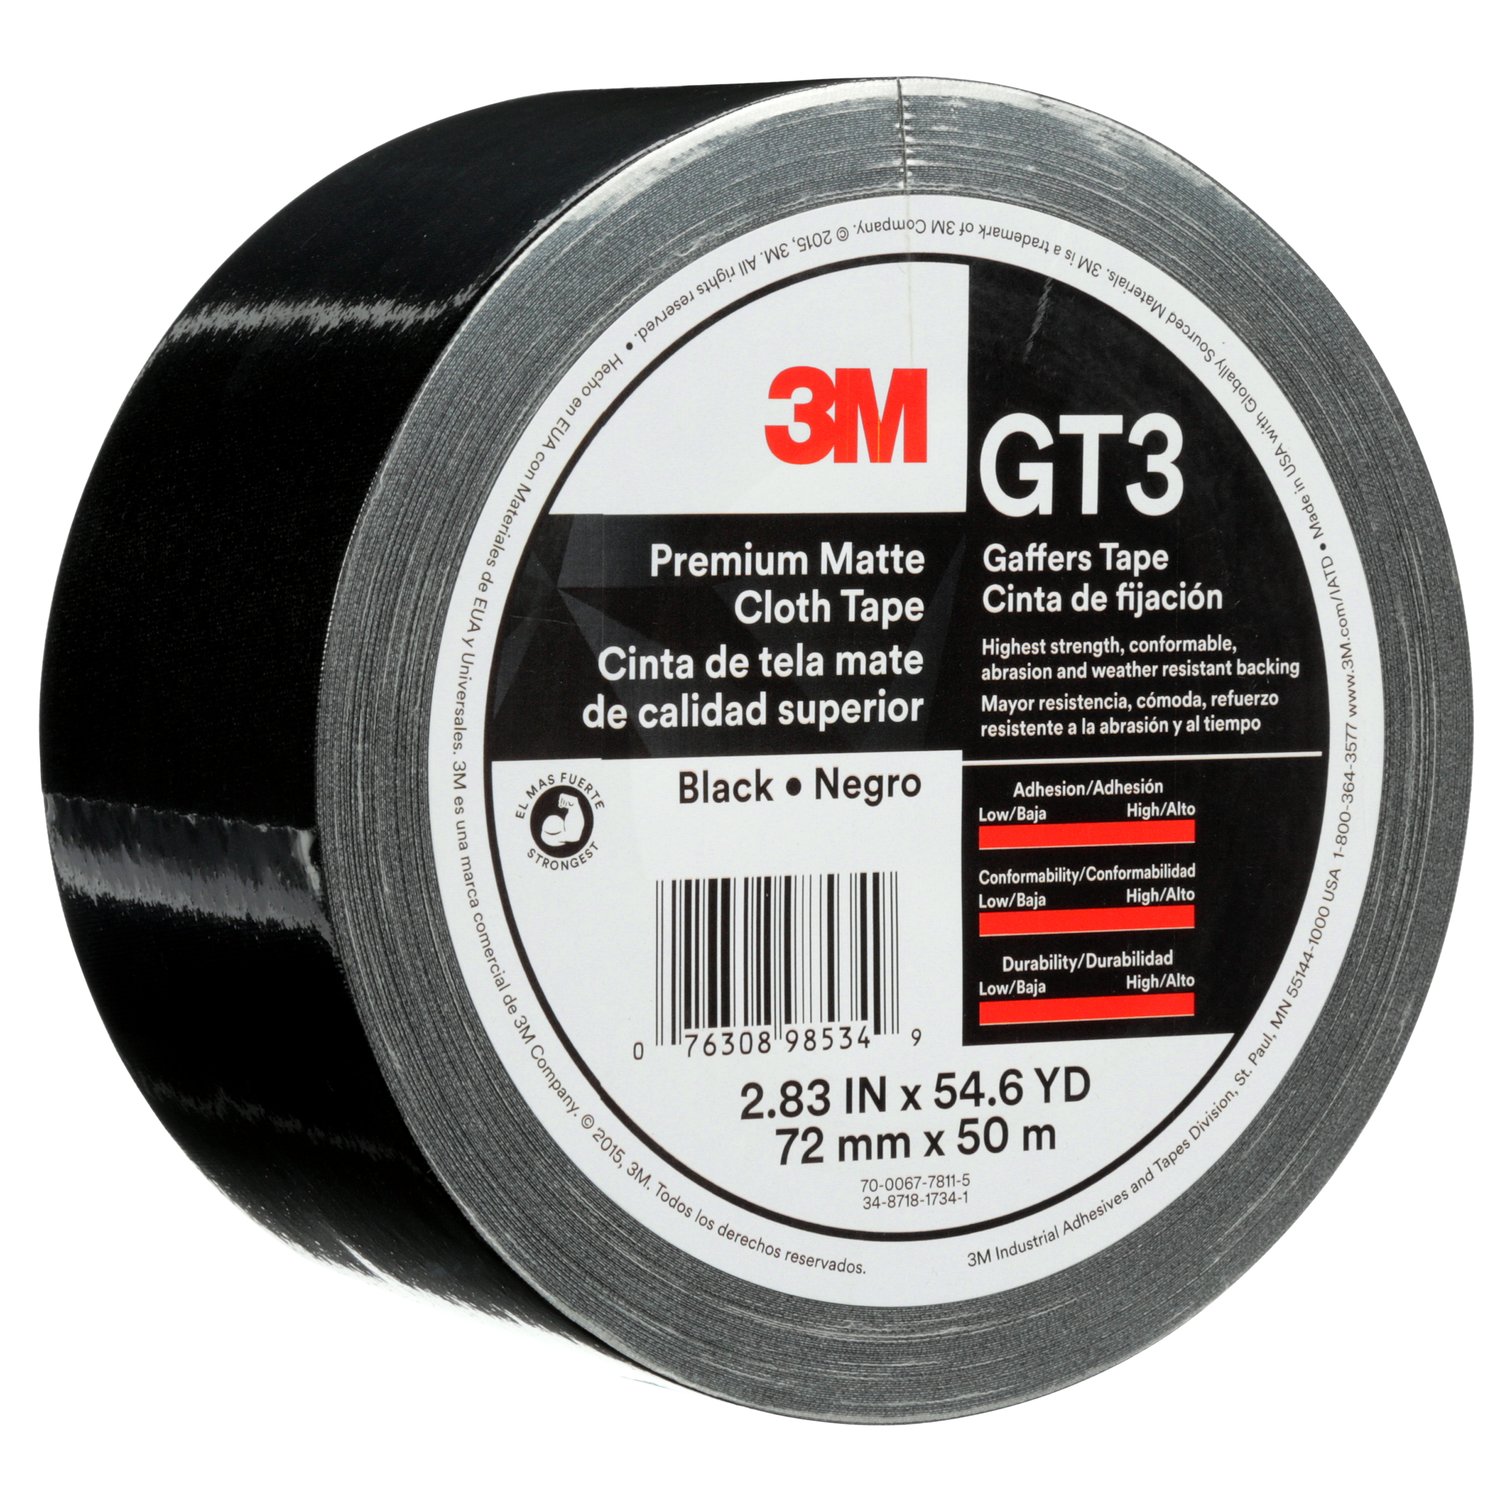 7010291525 - 3M Premium Matte Cloth (Gaffers) Tape GT3, Black, 72 mm x 50 m, 11 mil,
16/Case